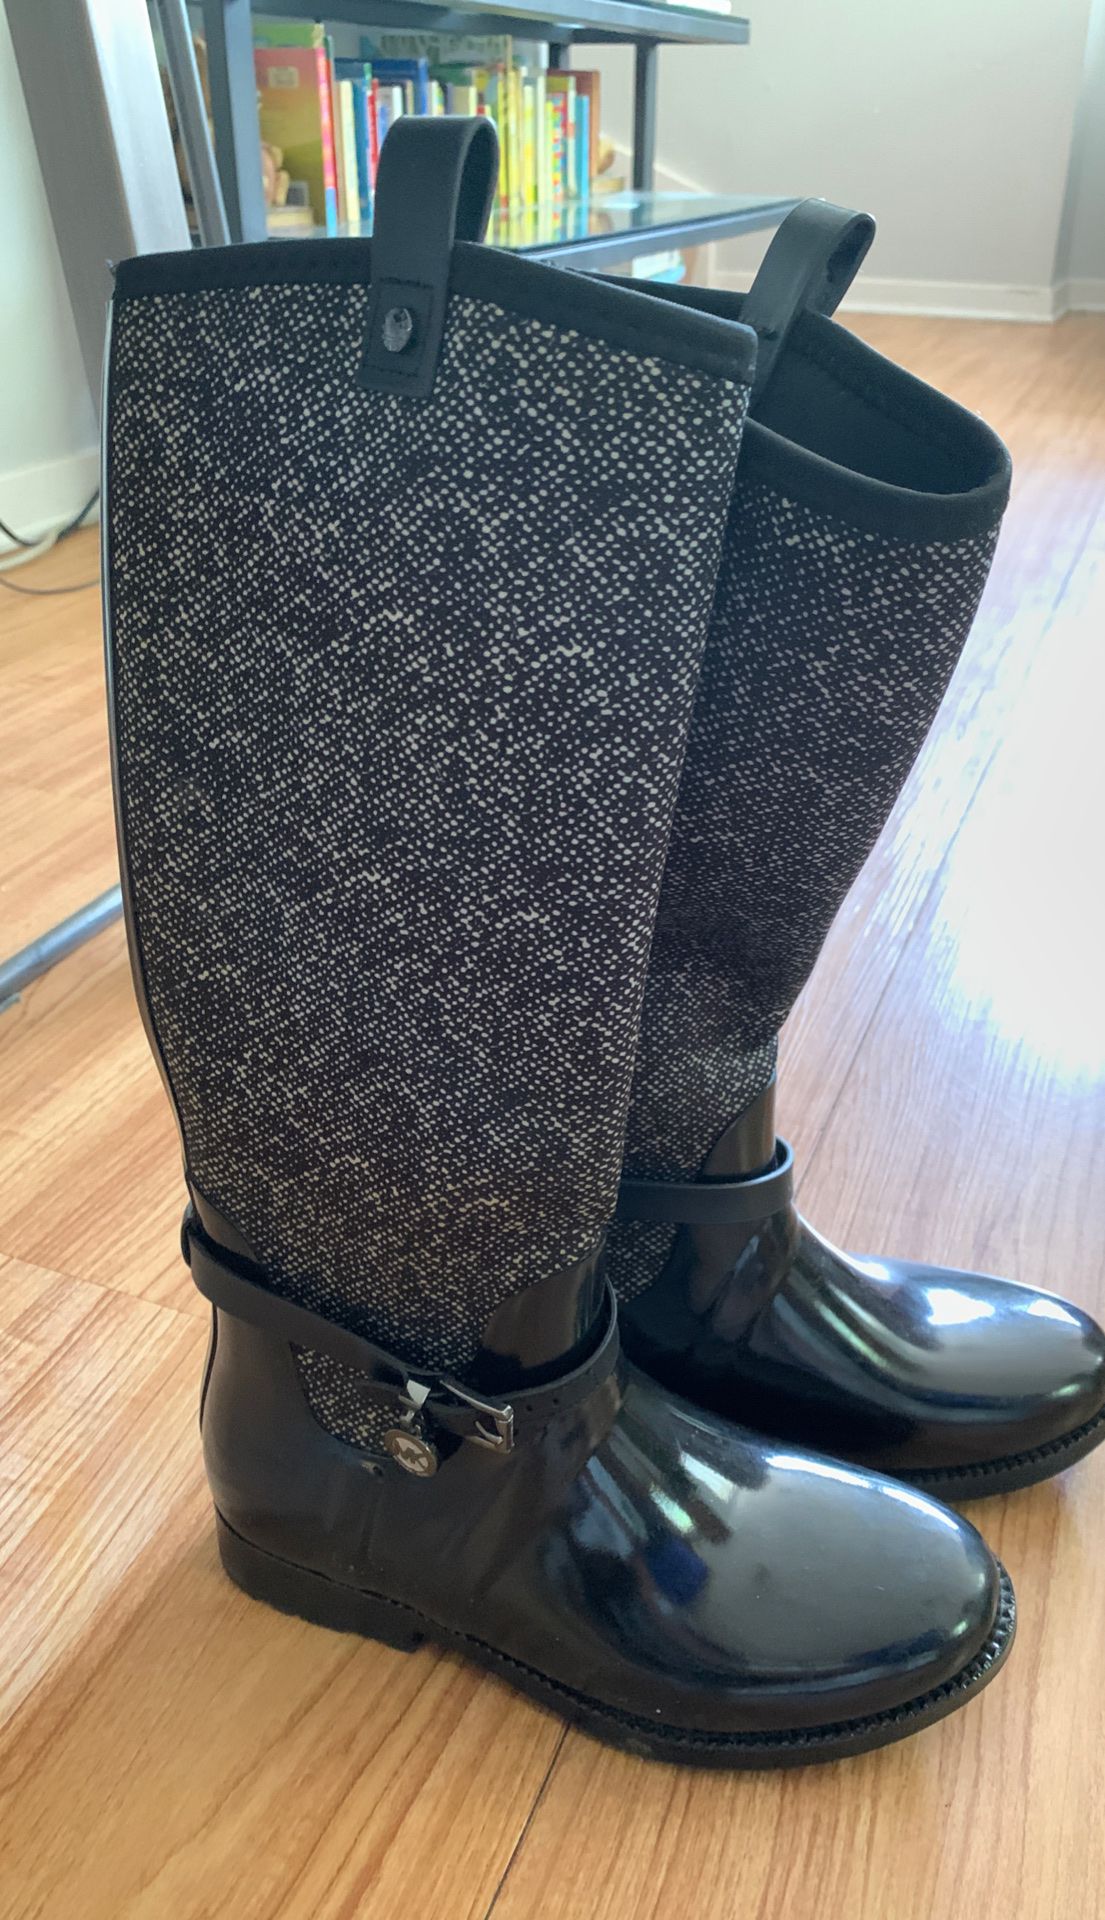 Michael Kors rain boots size 7